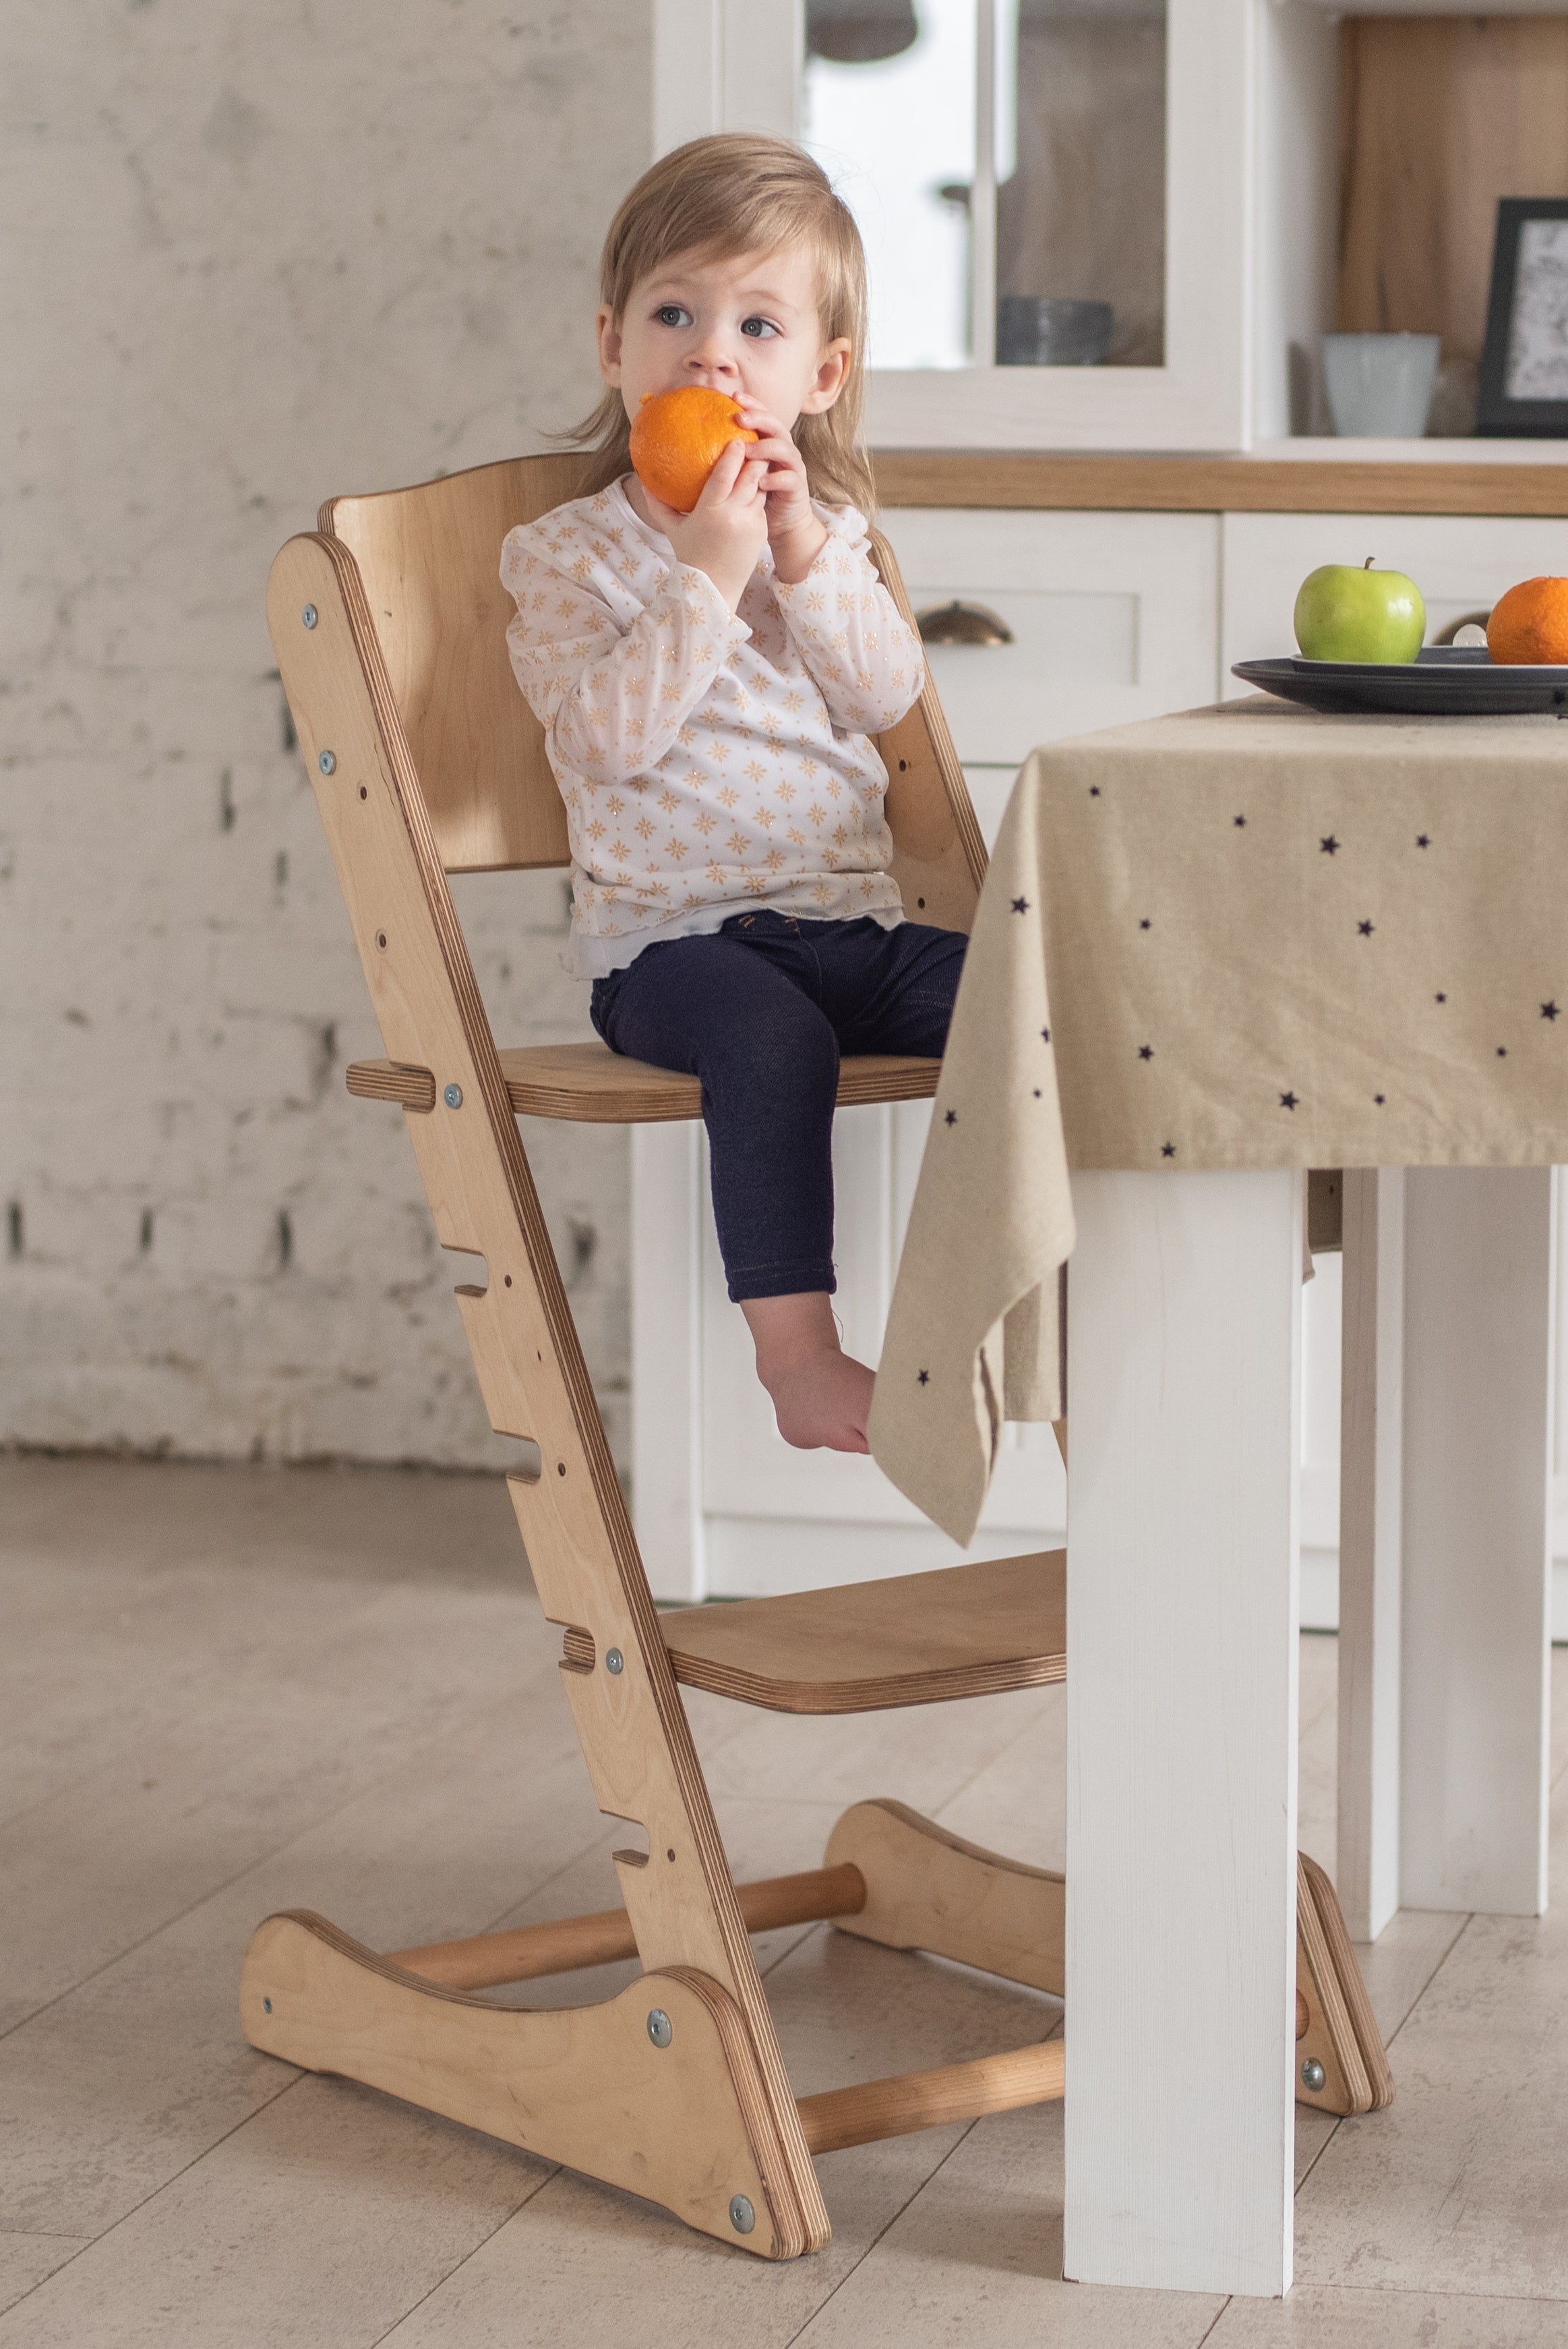 Goodevas Montessori Toddler Chair with Tabletop